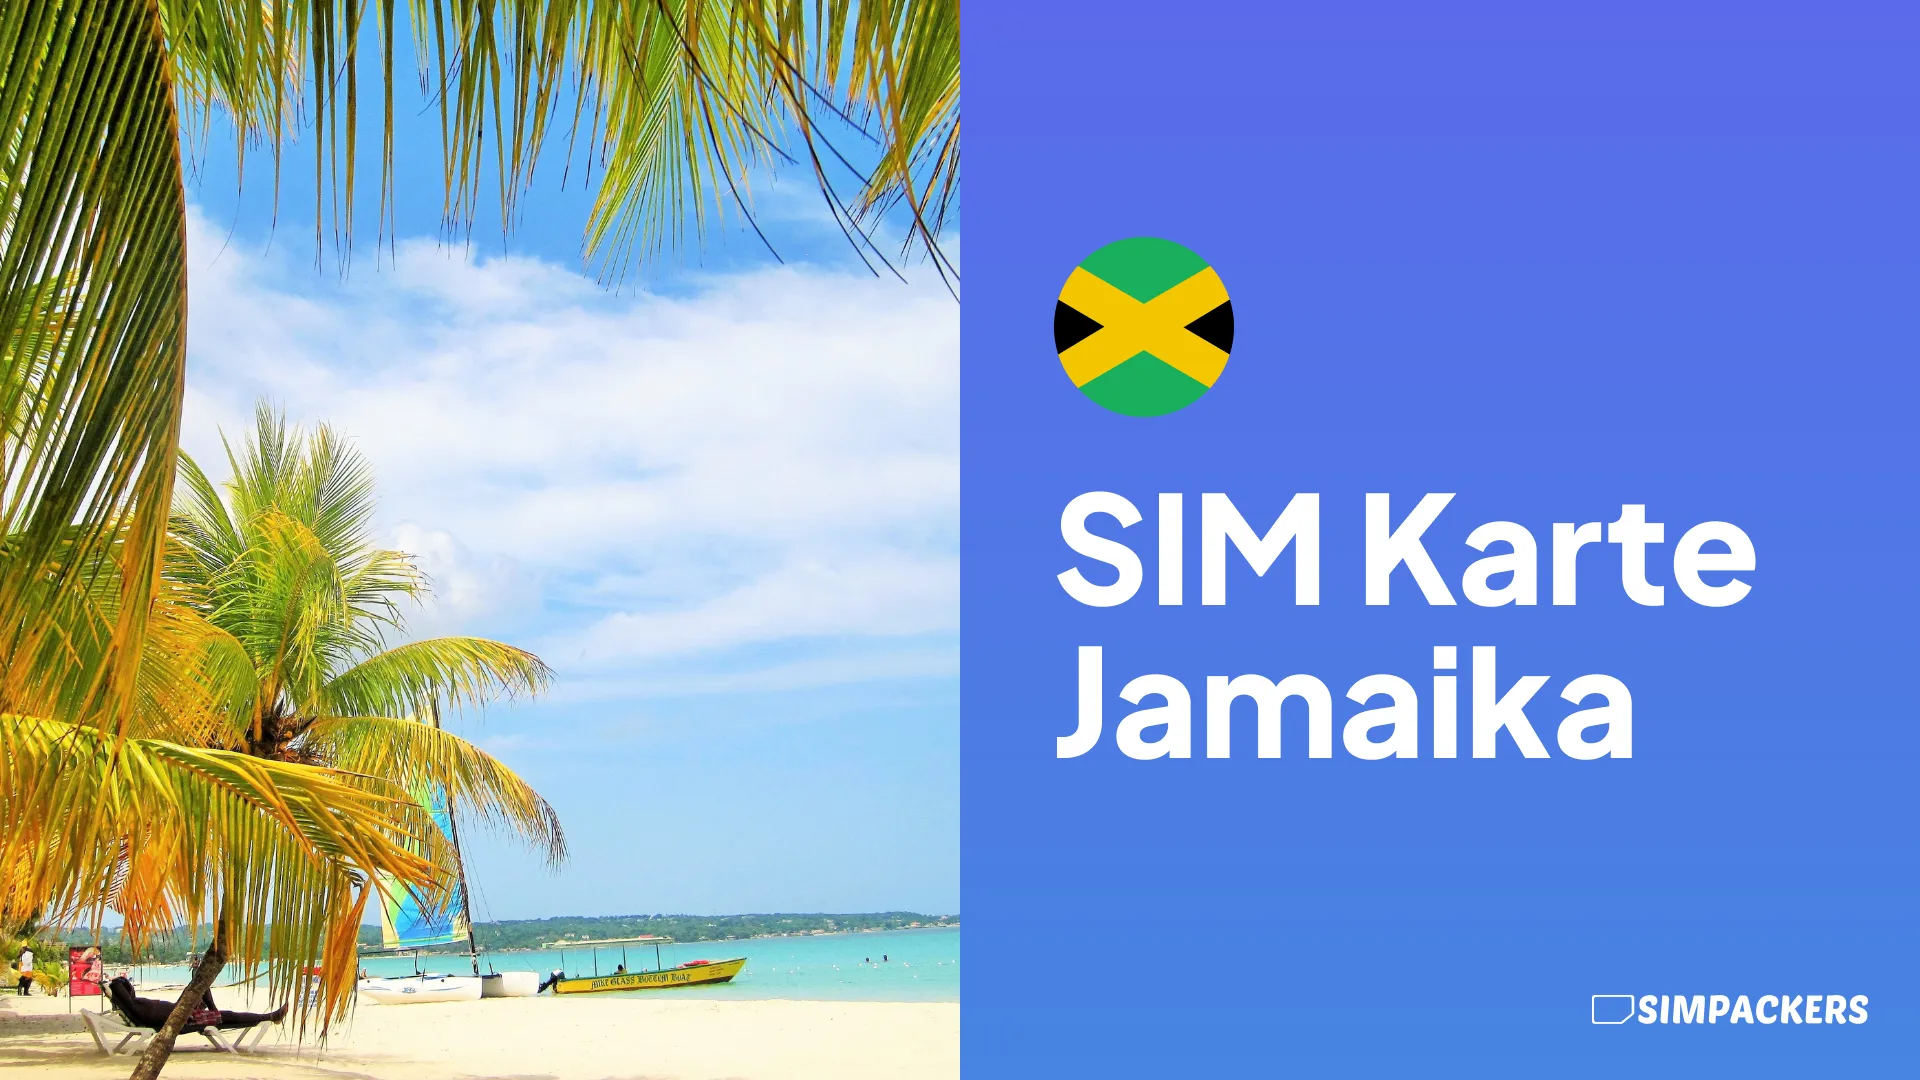 DE/FEATURED_IMAGES/sim-karte-jamaika.webp